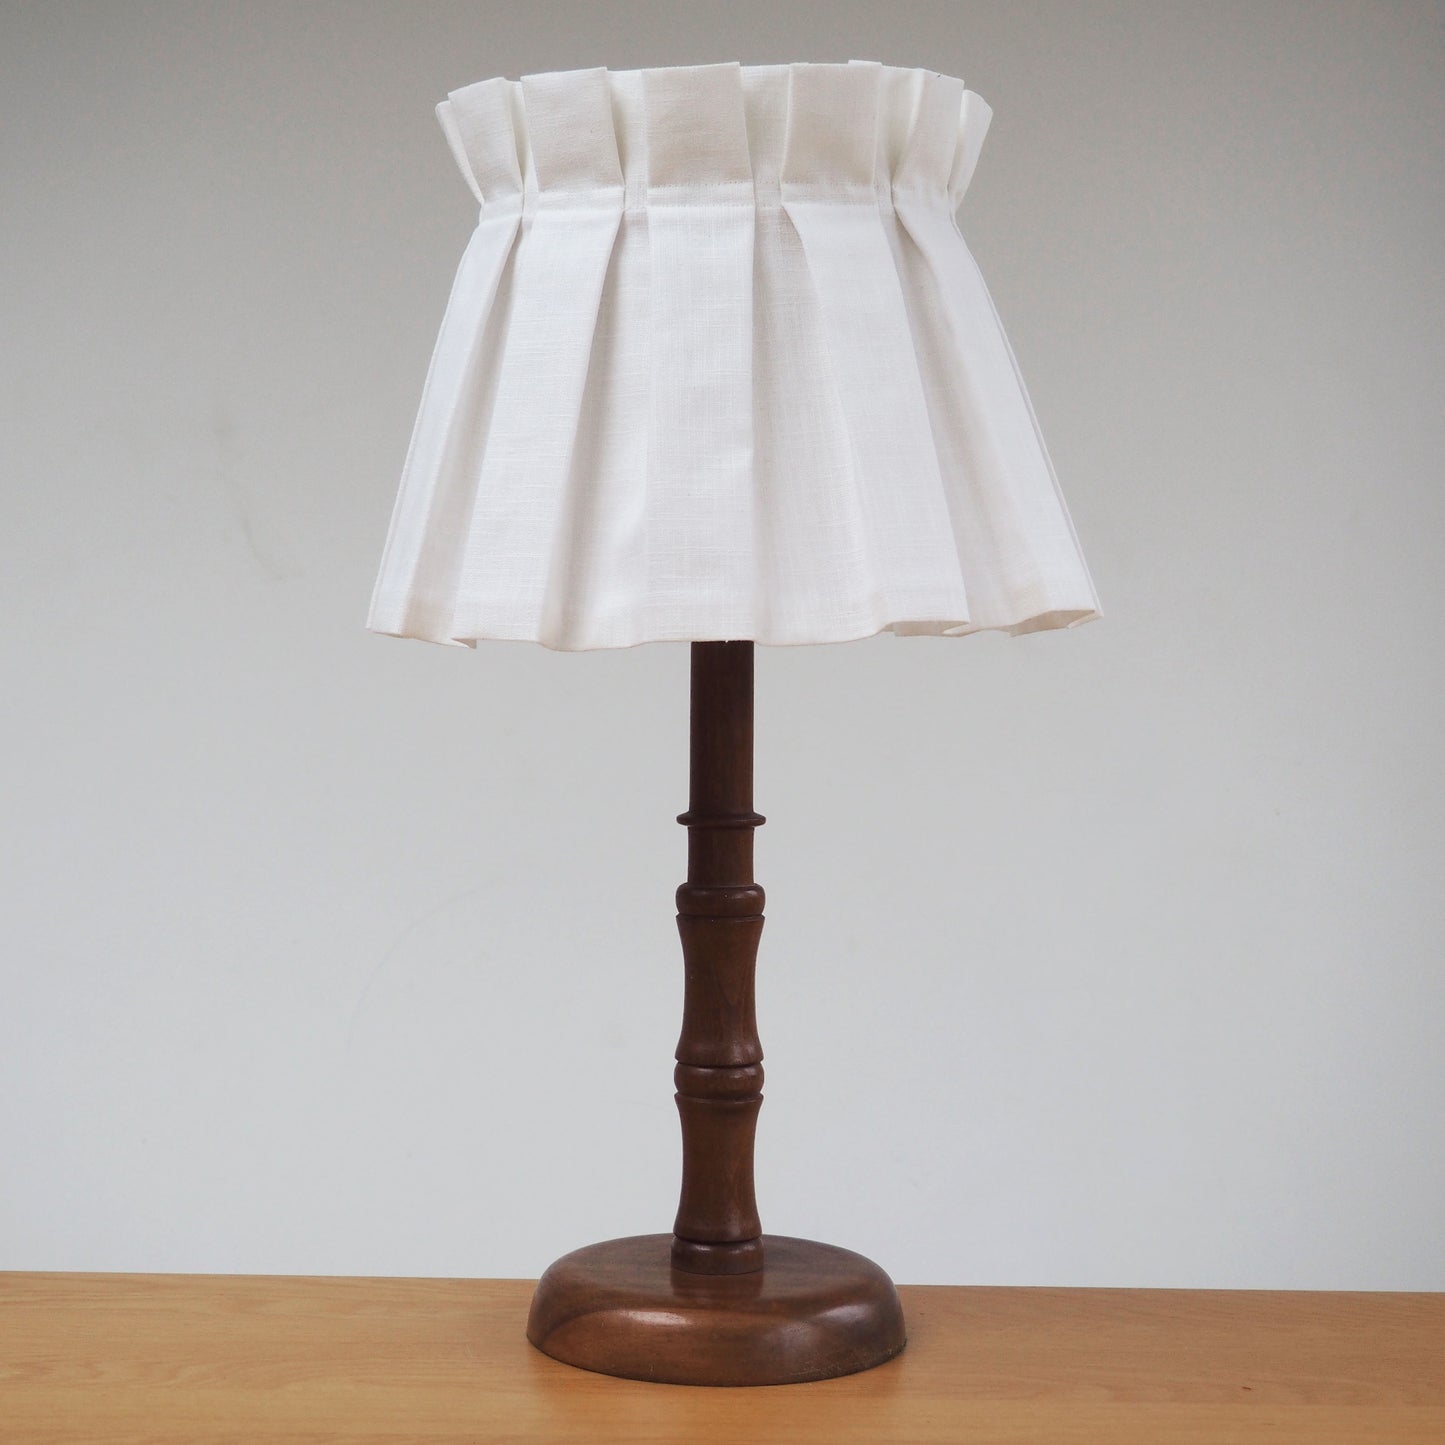 MEDIUM box pleat 100% linen white fabric lampshade